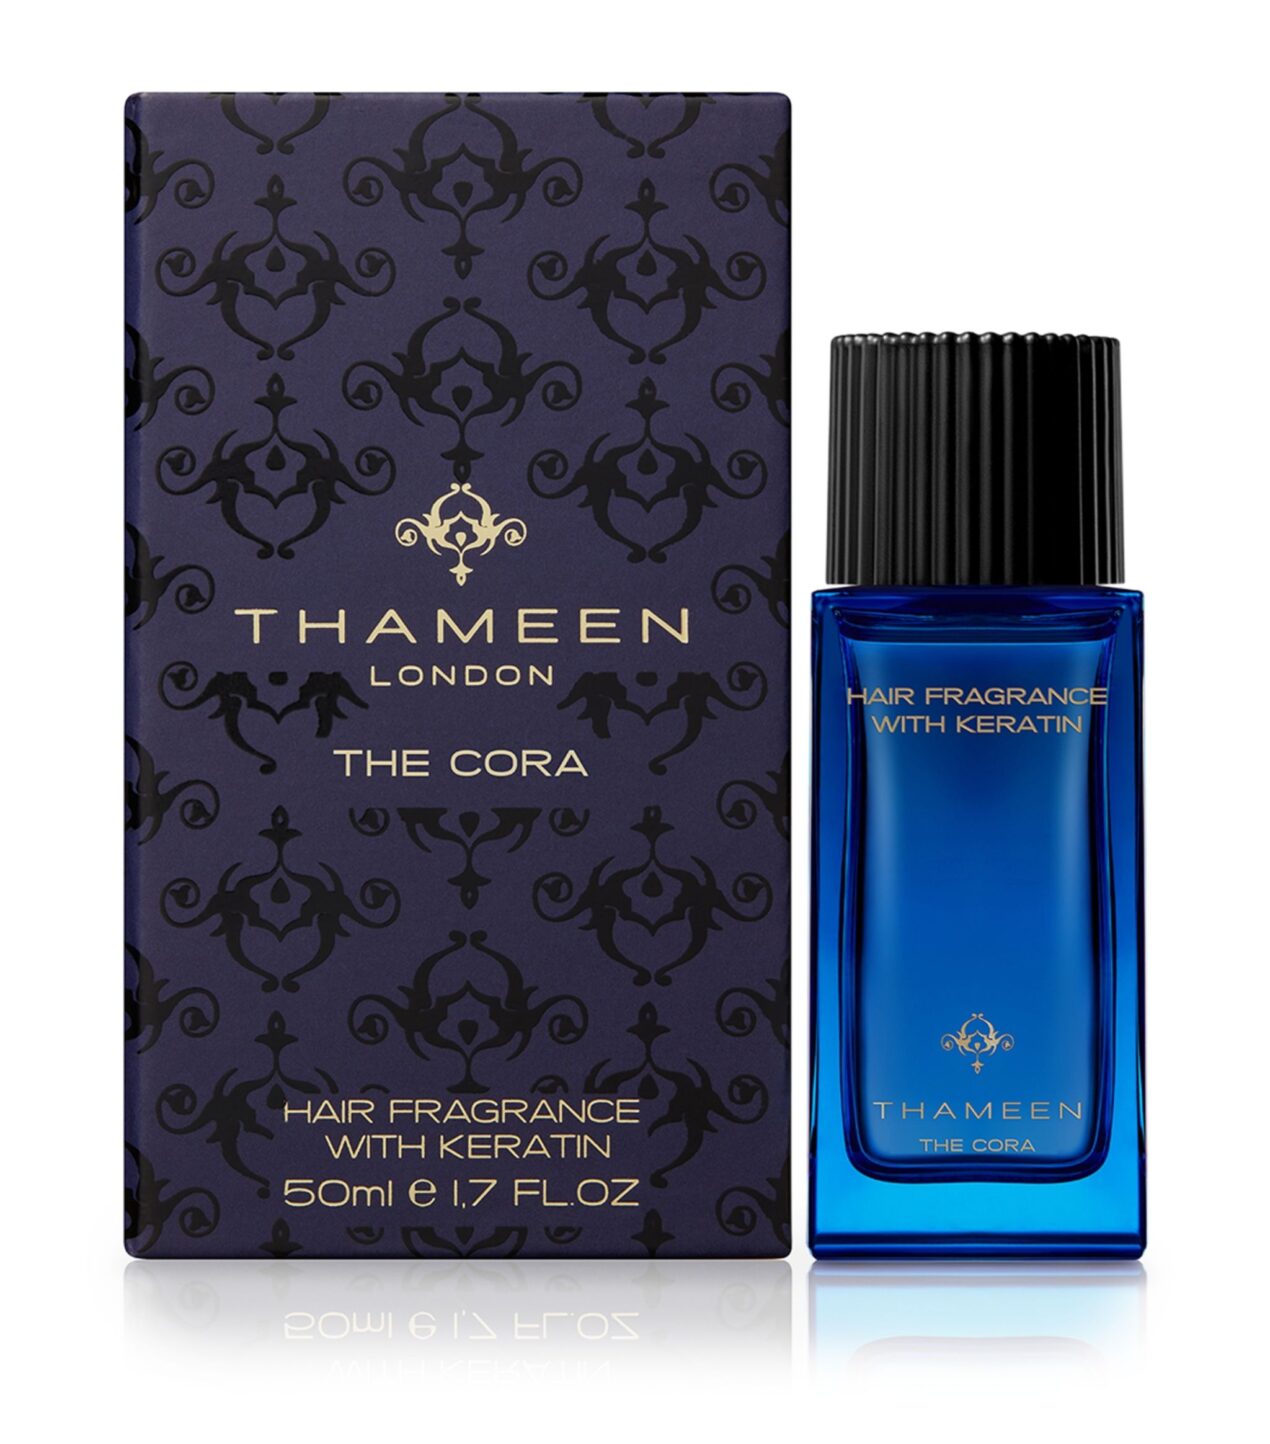 Thameen the cora hair fragrance